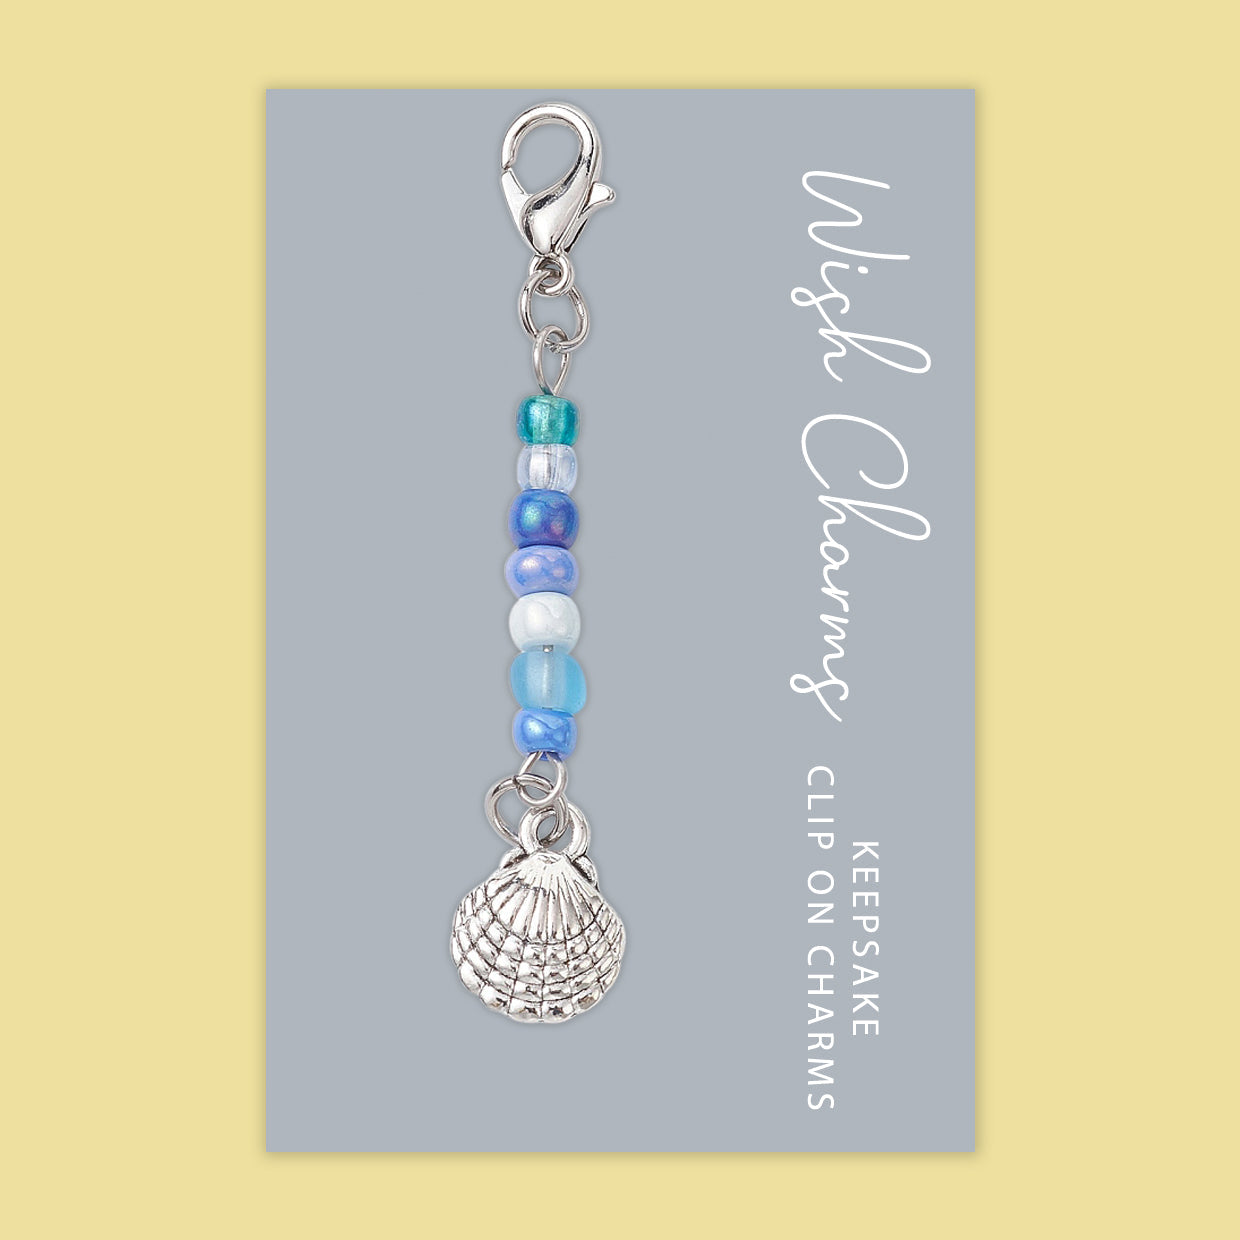 Sea Shell - Wish Charms - Keepsake Clip on Charm with Glass Beads